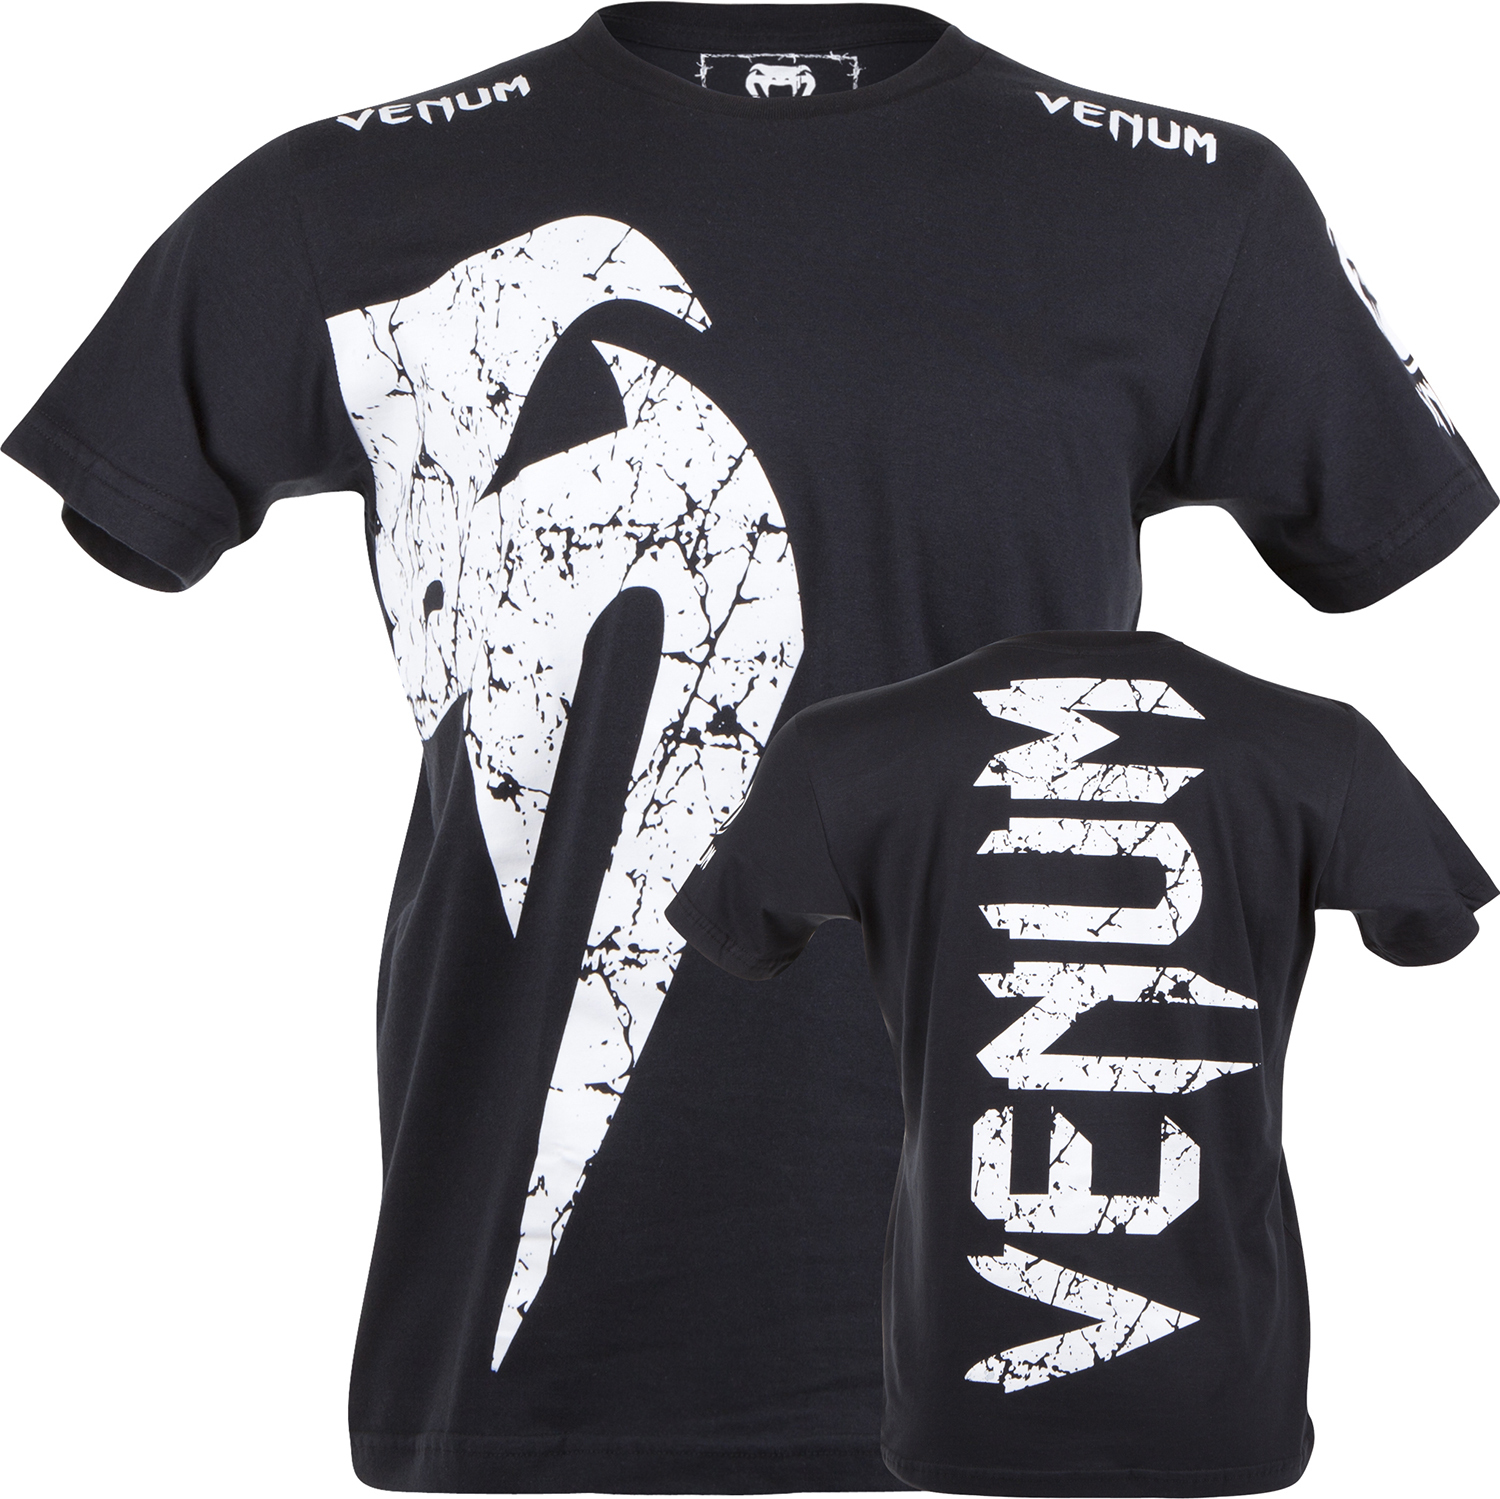 Бренд футболки купить. Футболка Venum giant Tshirt - Black. ММА футболка Венум. Майки юфс Венум. Футболка UFC Venum.